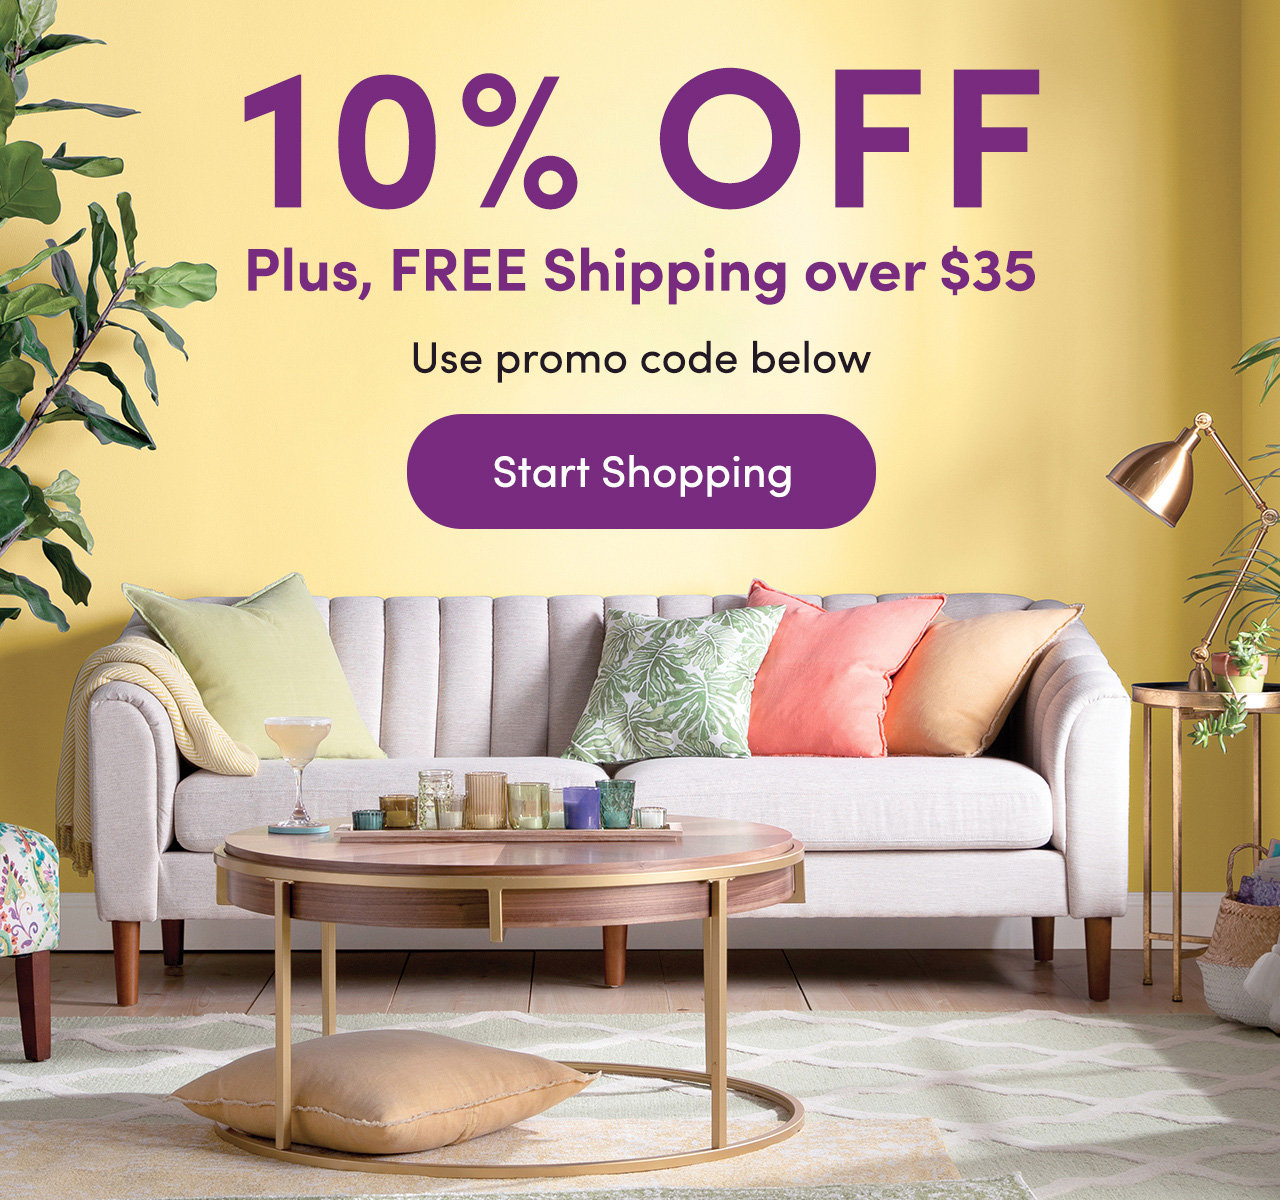 Enjoy 10% OFF - Plus, free shipping over $35 - Use promo code below - Start Shopping